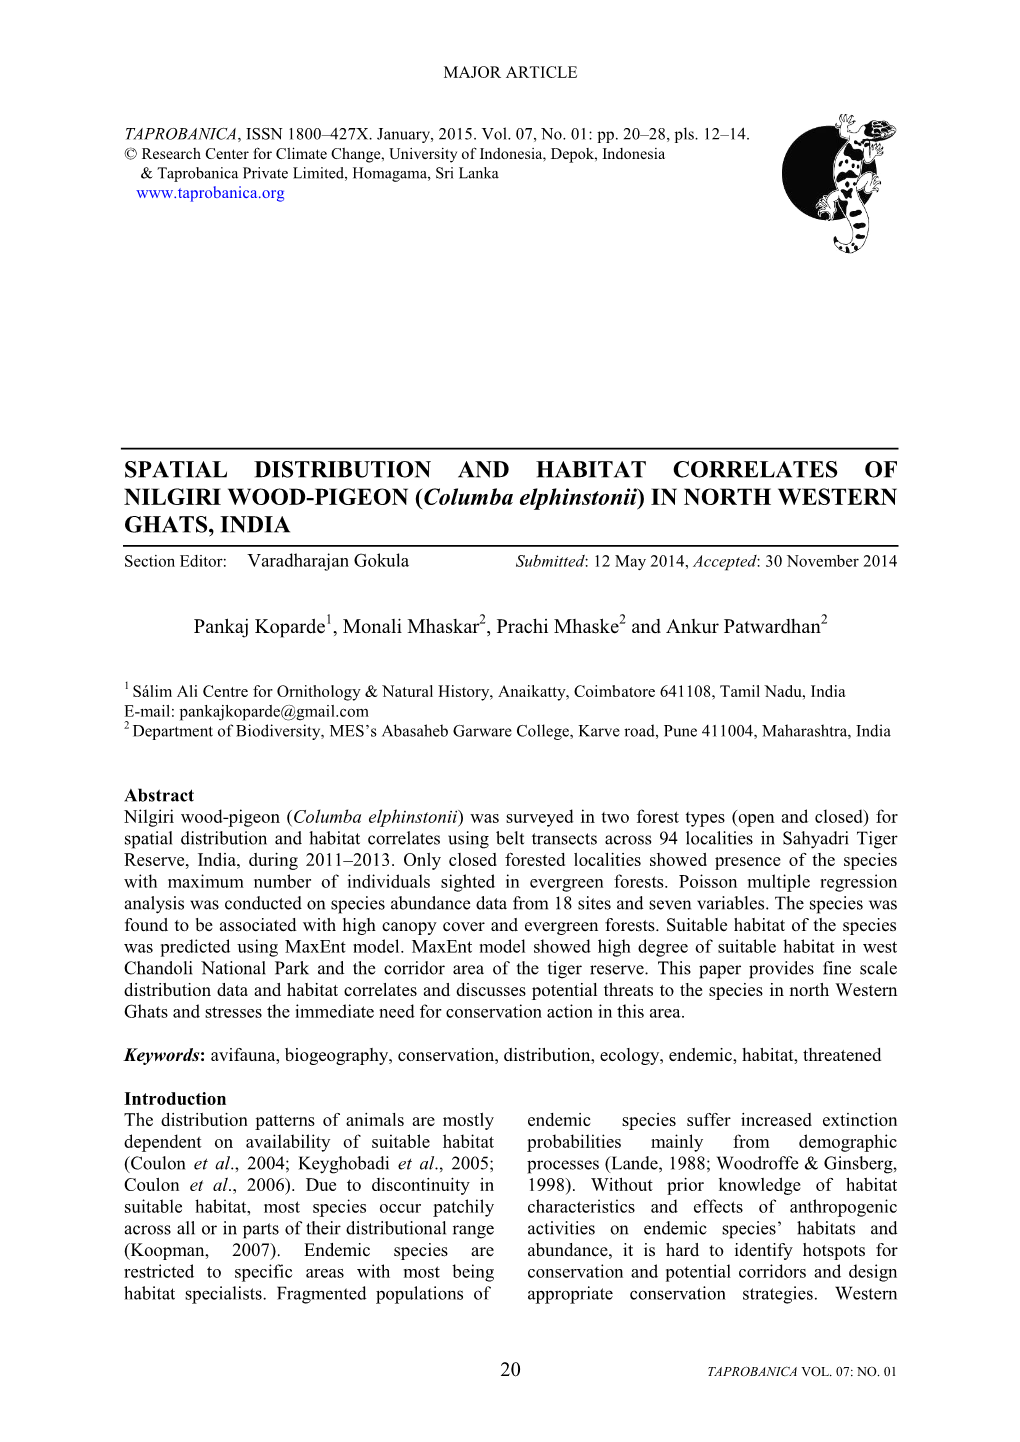 SPATIAL DISTRIBUTION and HABITAT CORRELATES of NILGIRI WOOD-PIGEON (Columba Elphinstonii) in NORTH WESTERN GHATS, INDIA